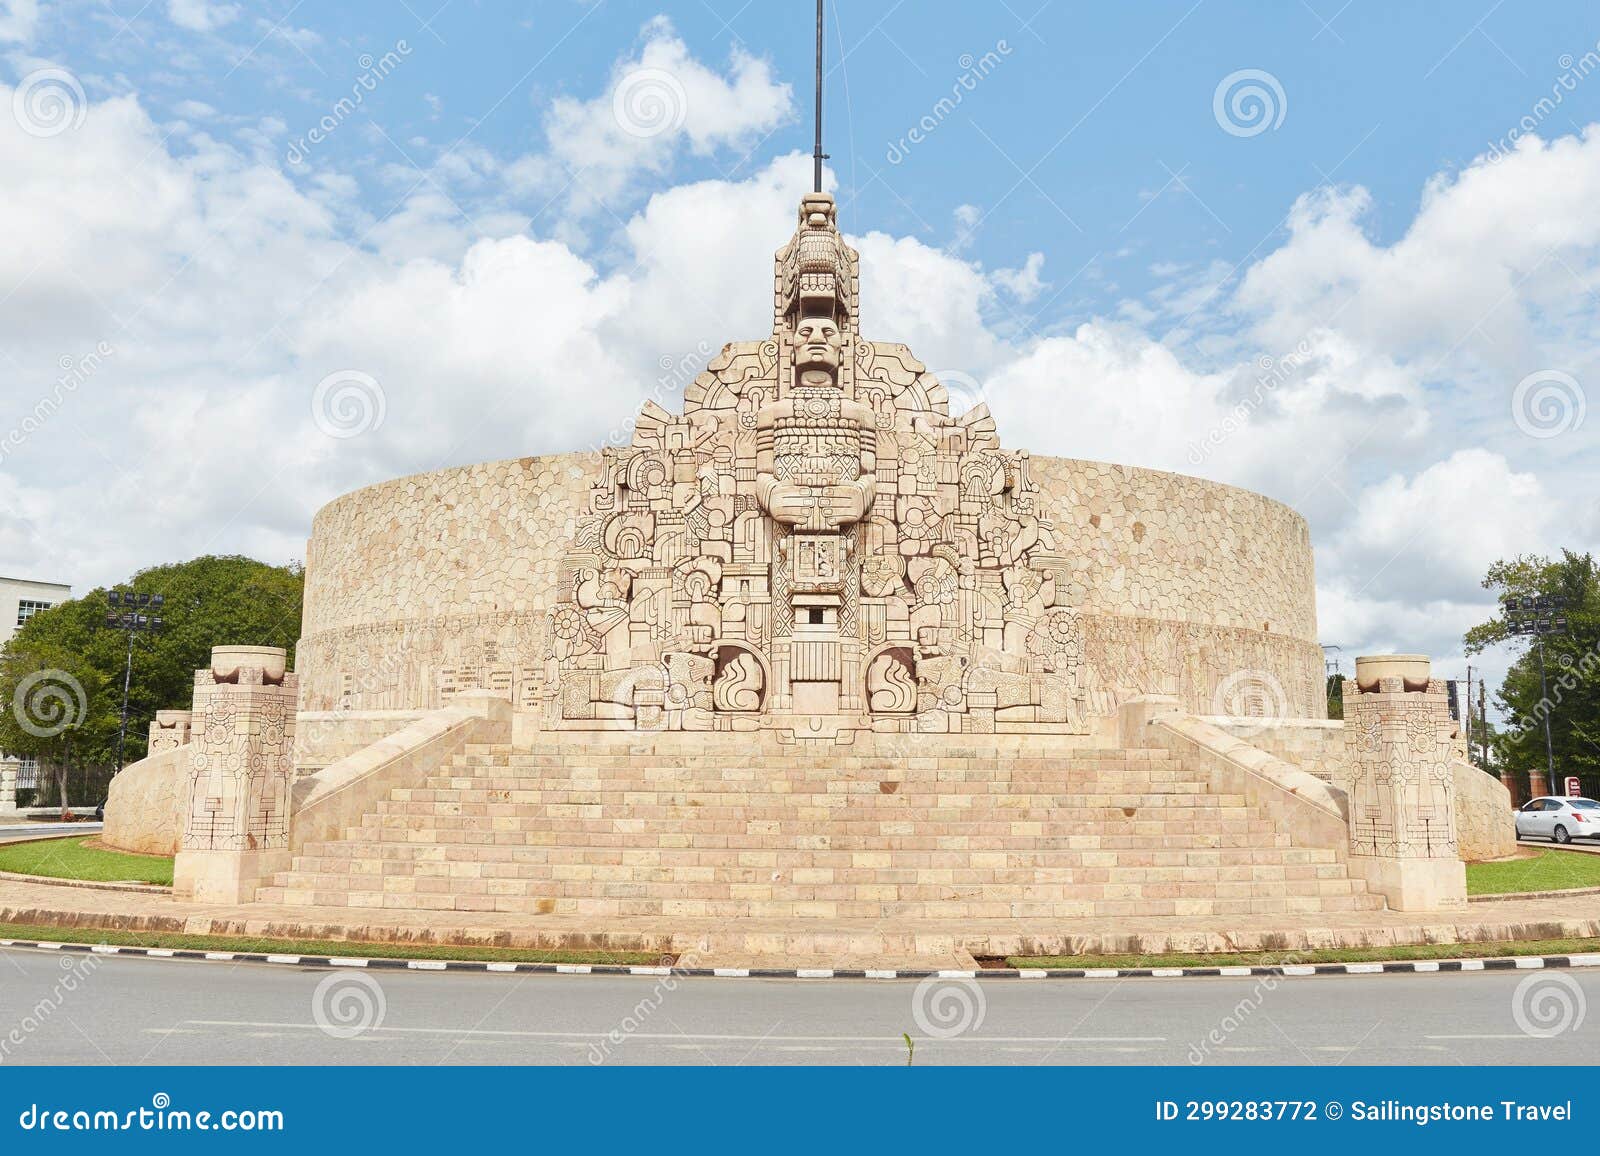 monumento a la patria in merida, a neo-mayan monument erected in 1956